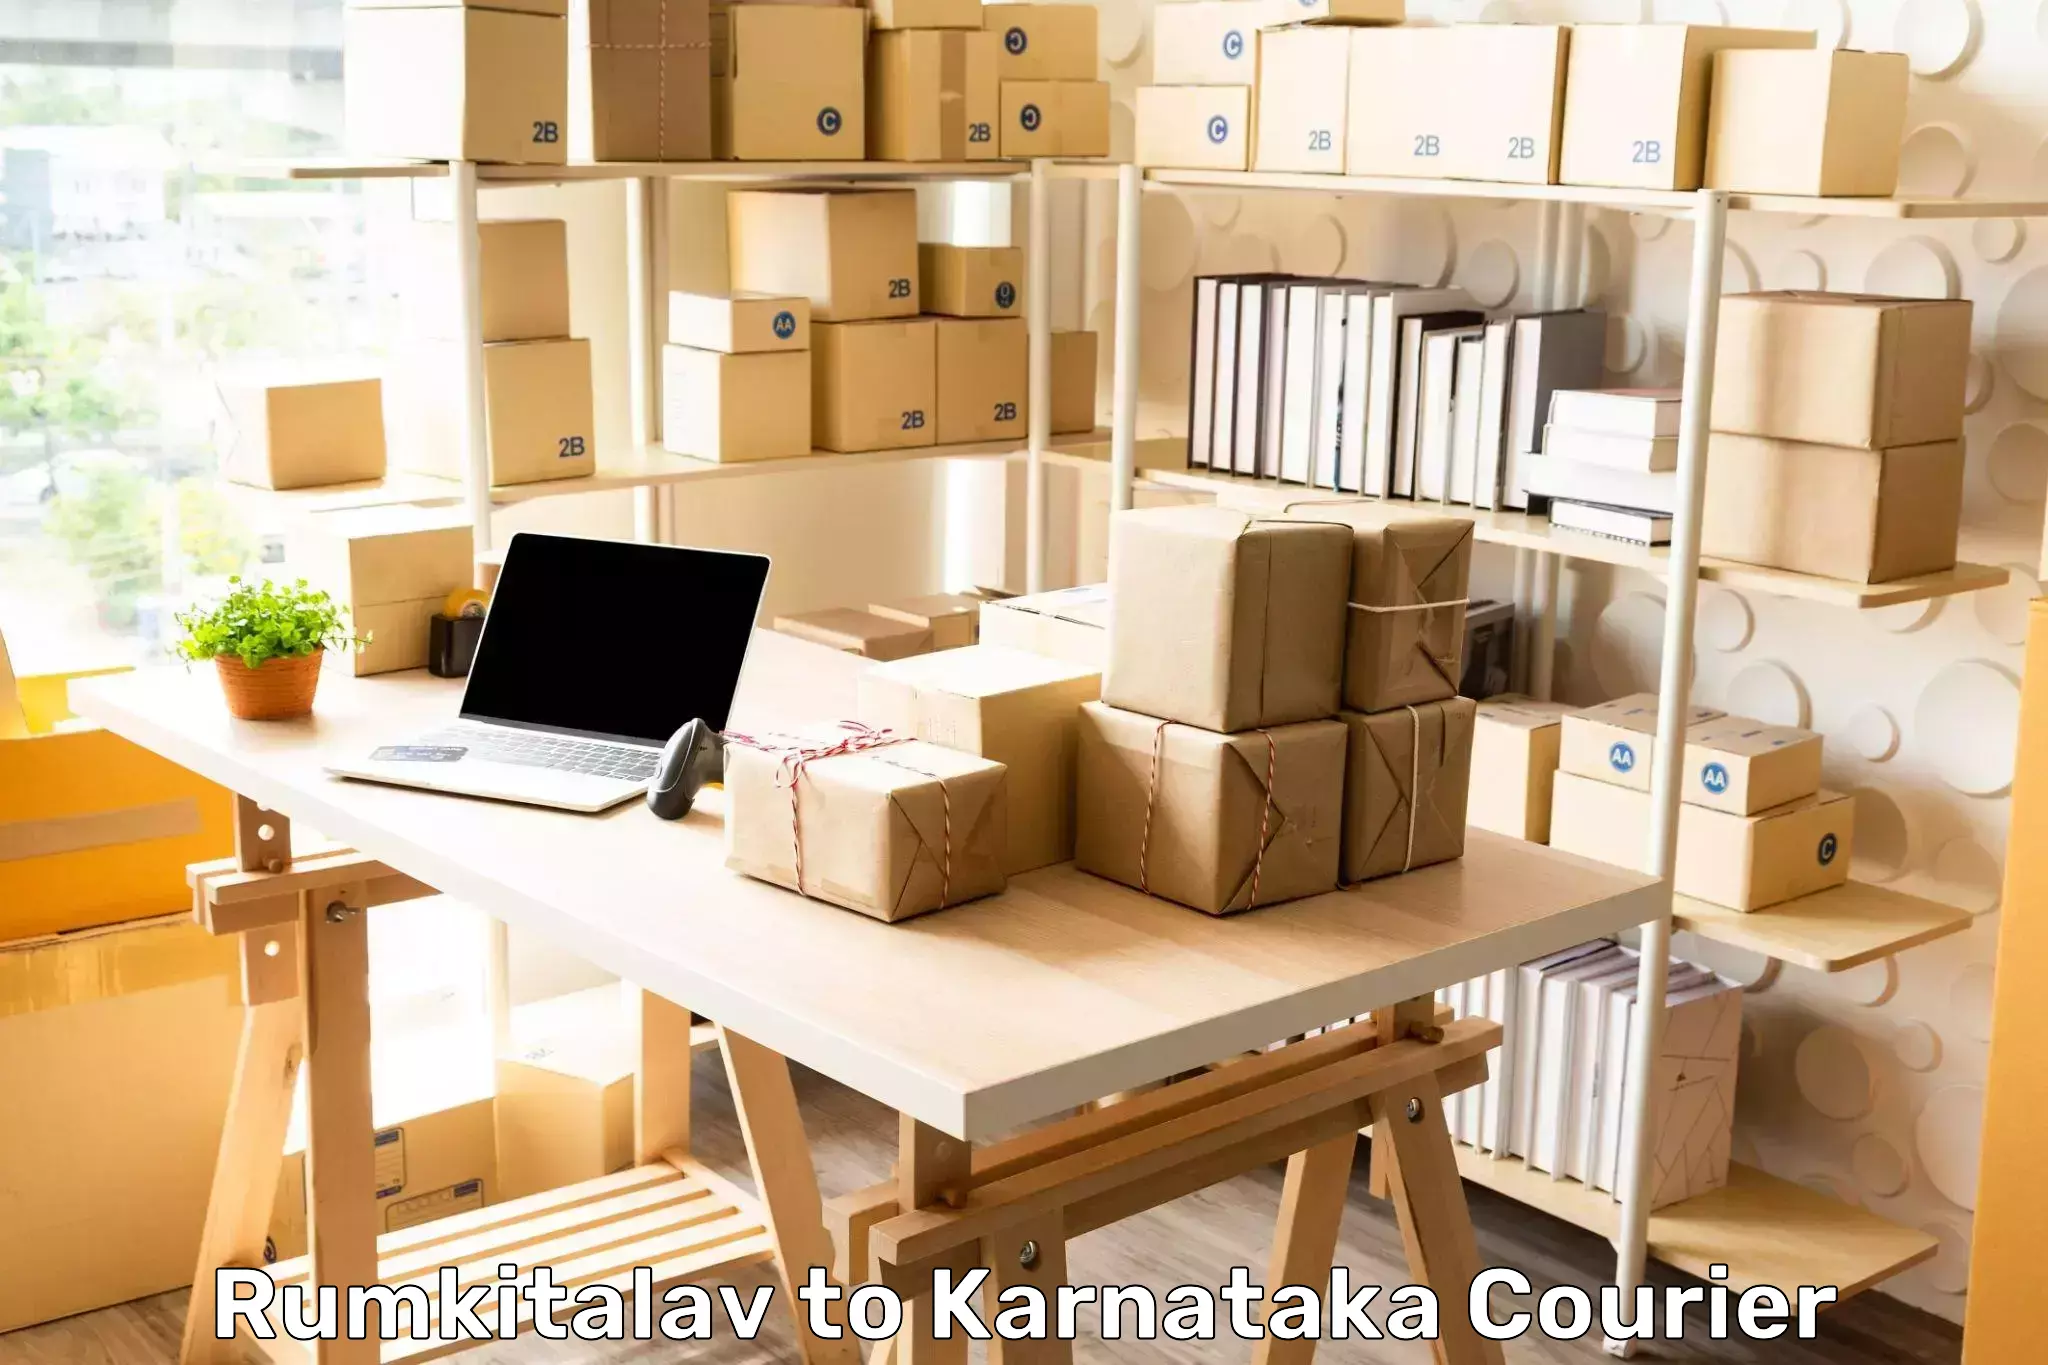 Efficient cargo handling Rumkitalav to Karnataka